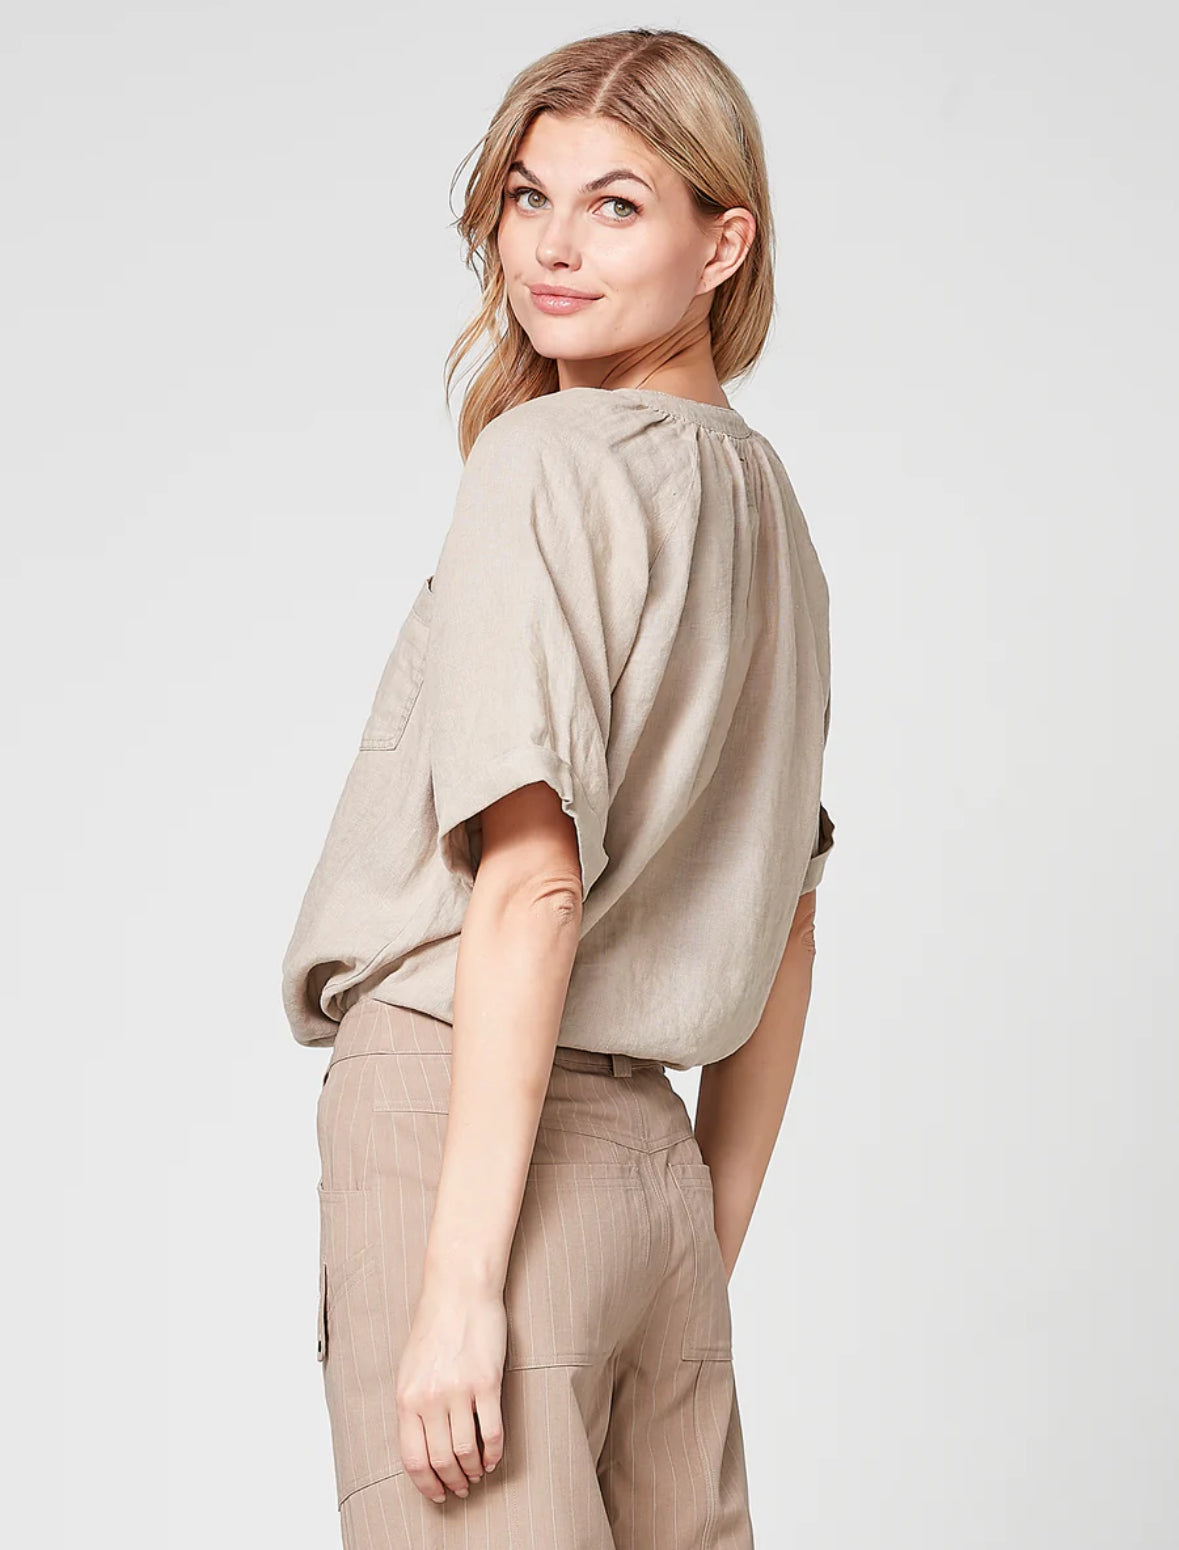 NU DENMARK Tessa linen blouse